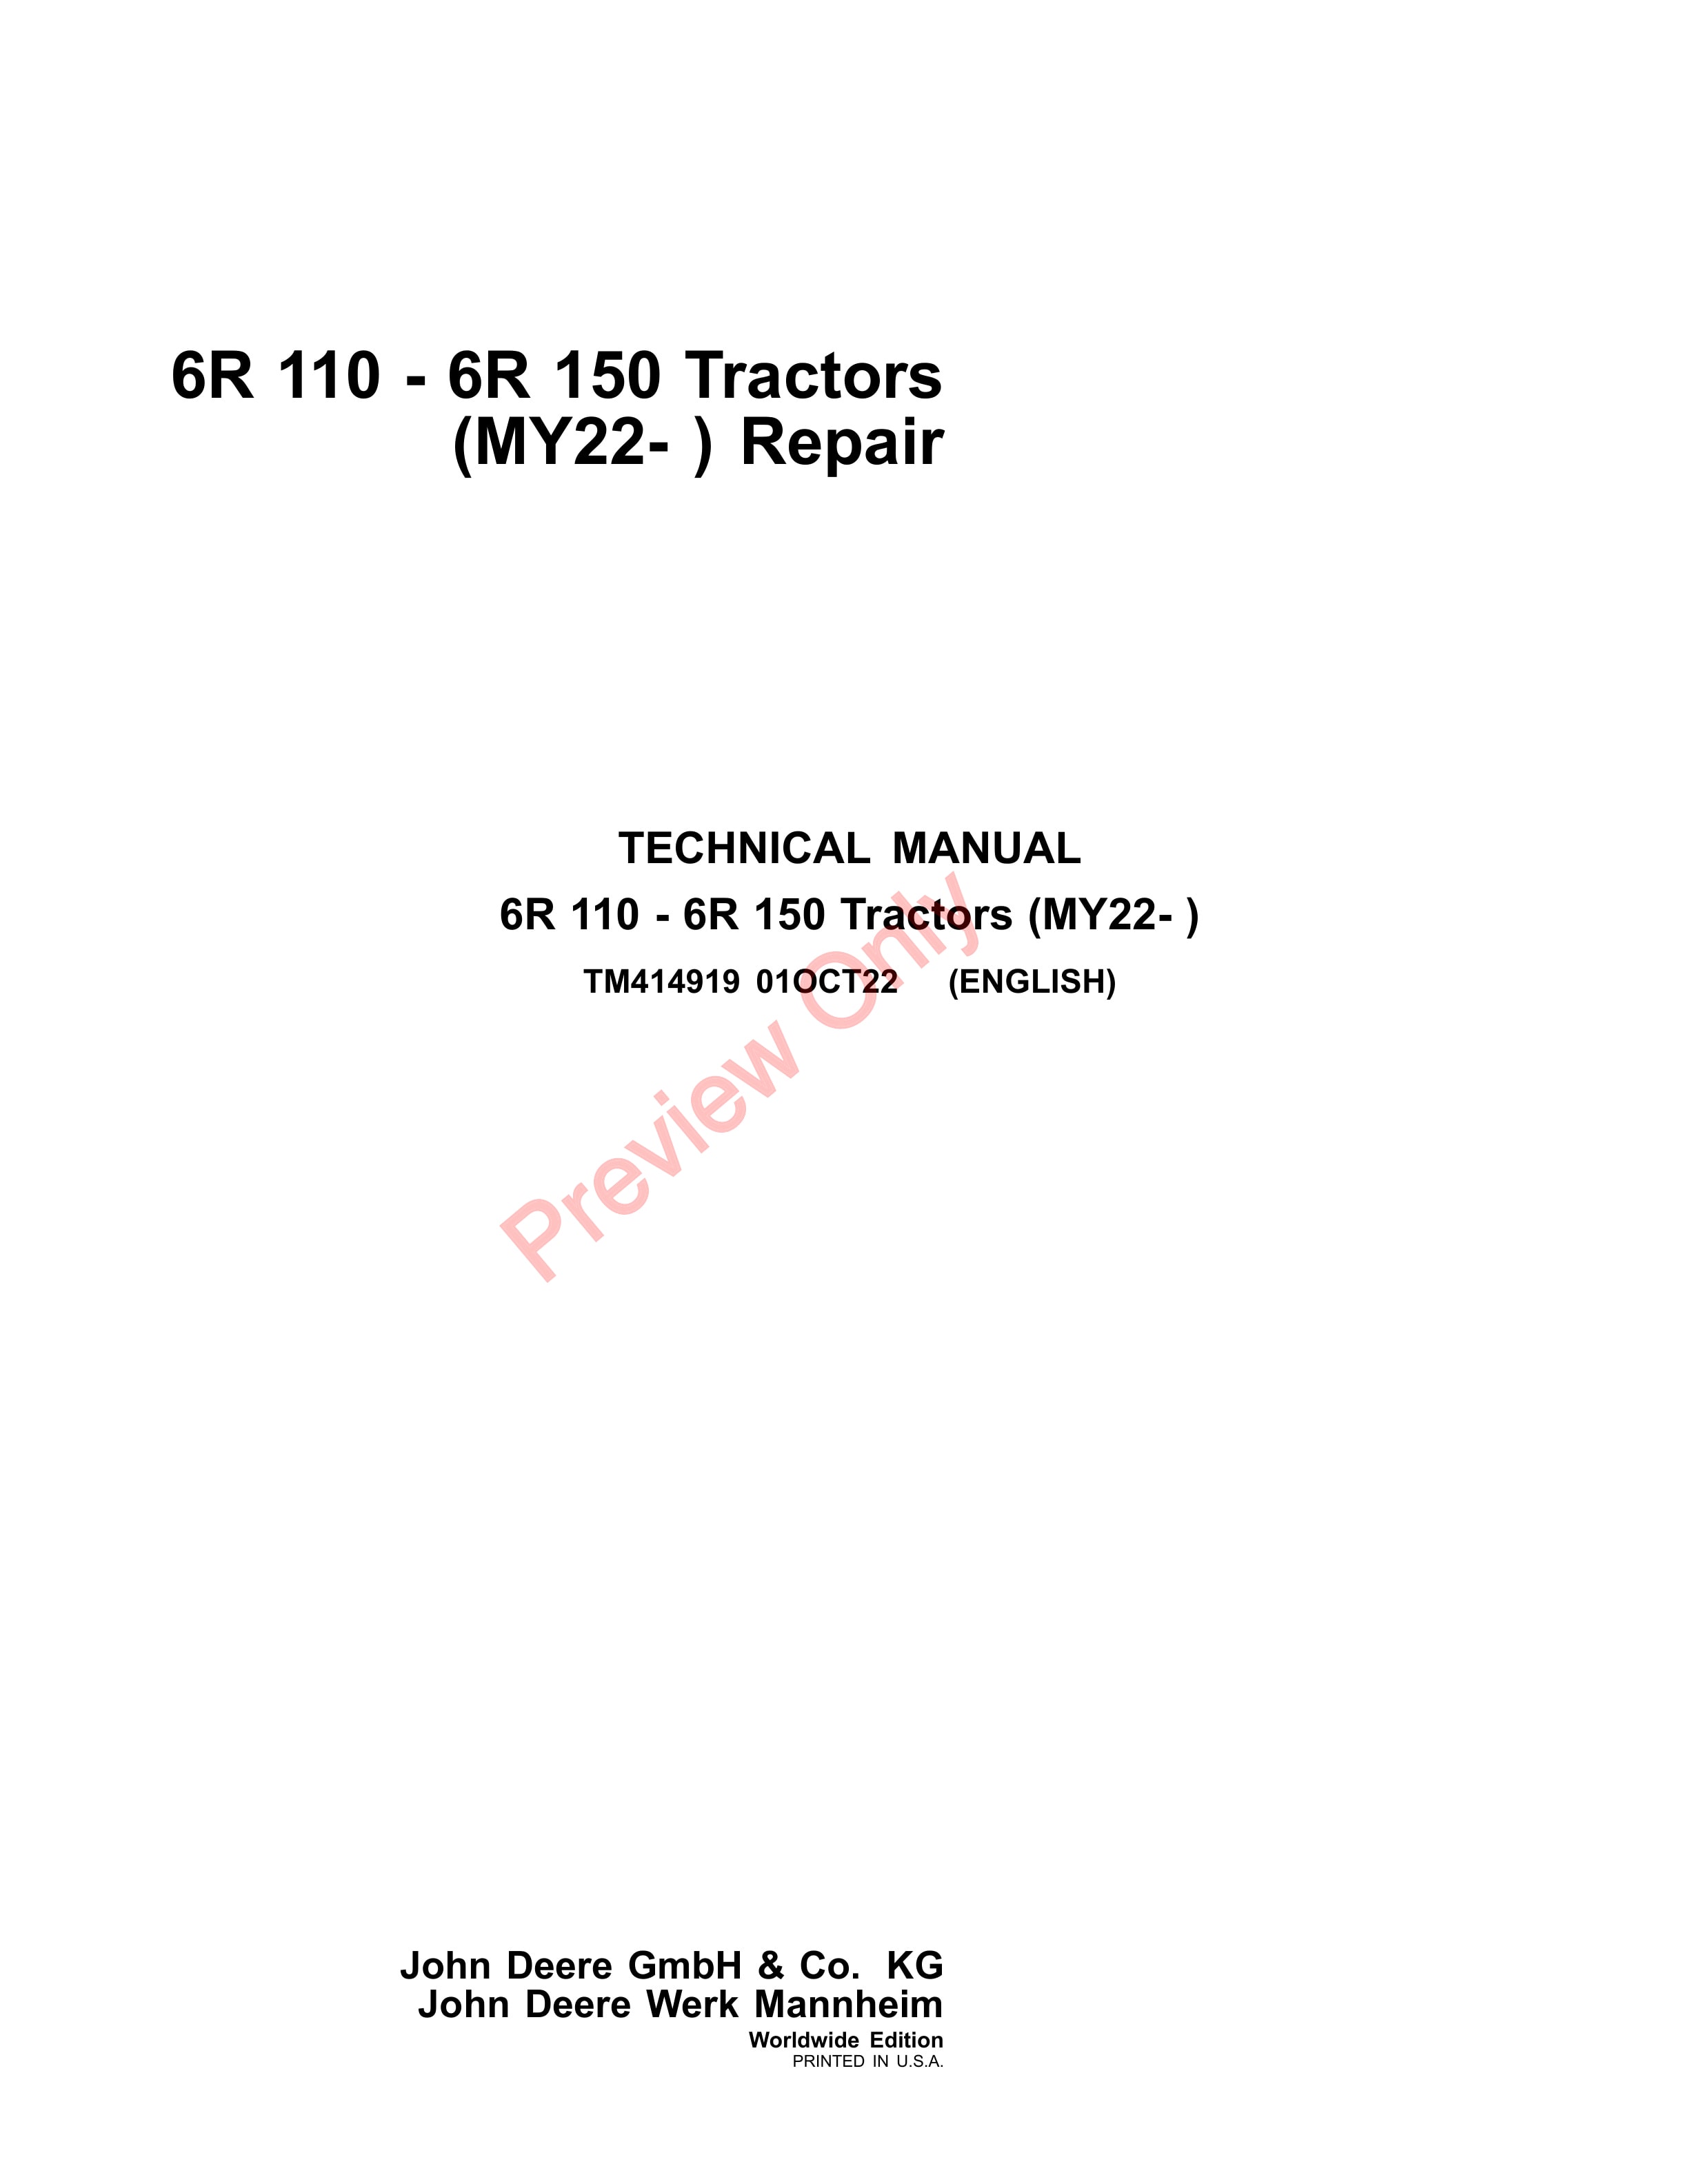 John Deere 6R 110 6R 150 Tractors MY22 Technical Manual TM414919 01MAR23 1